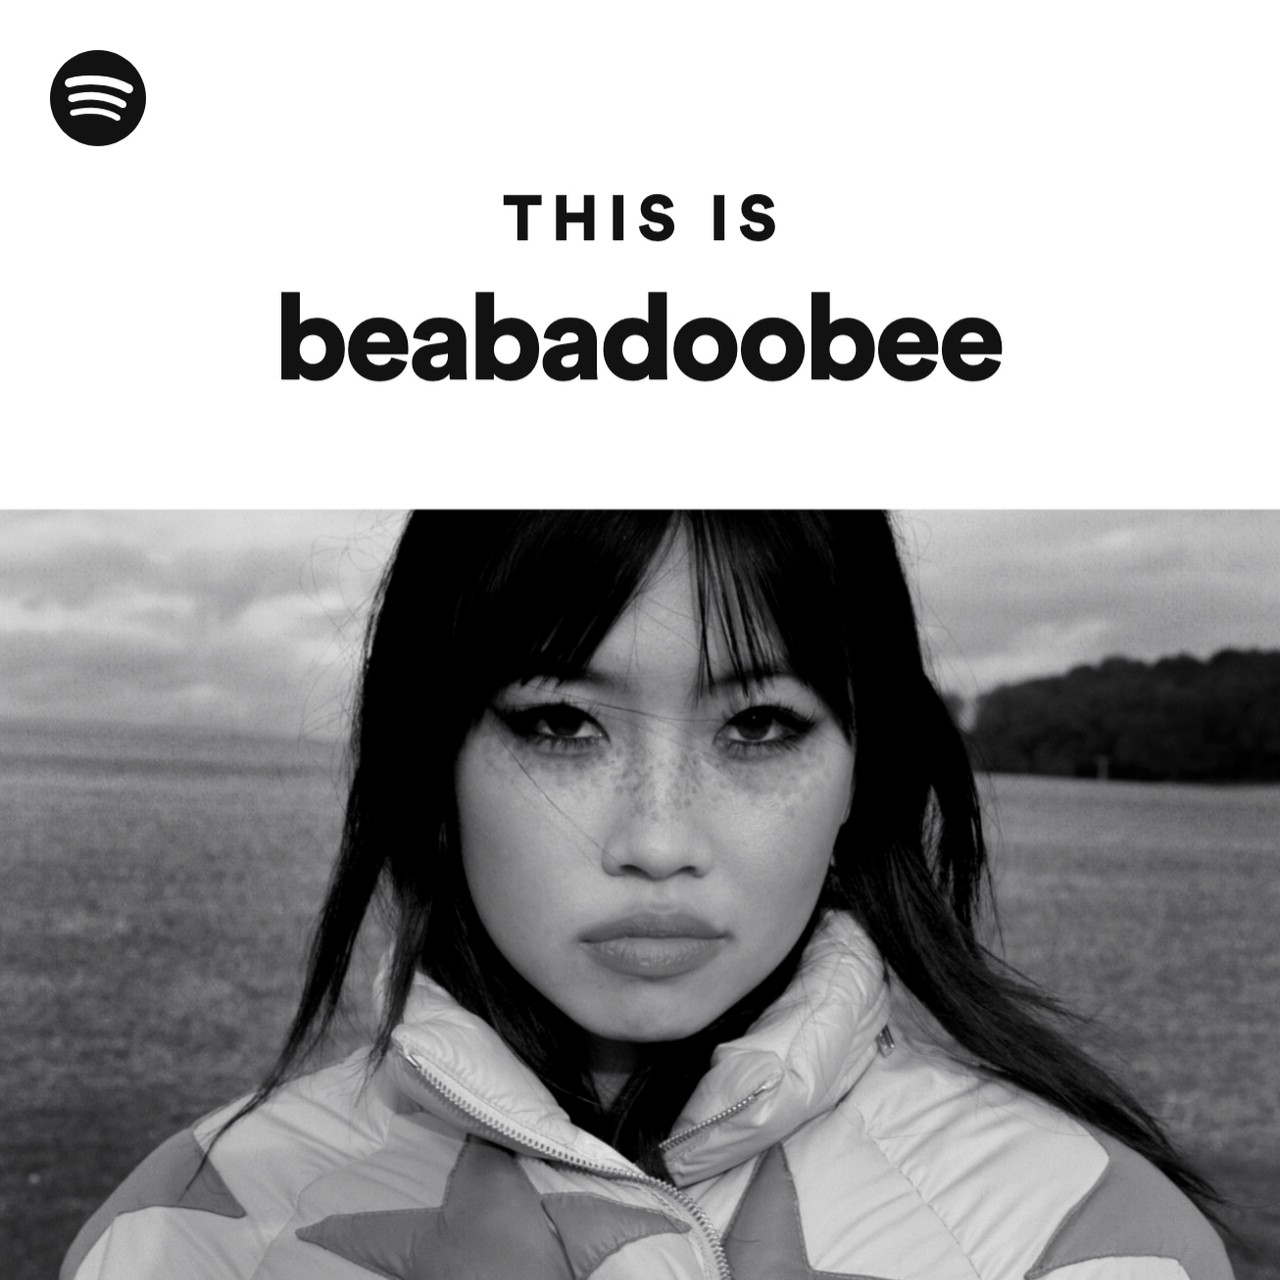 This Is beabadoobee